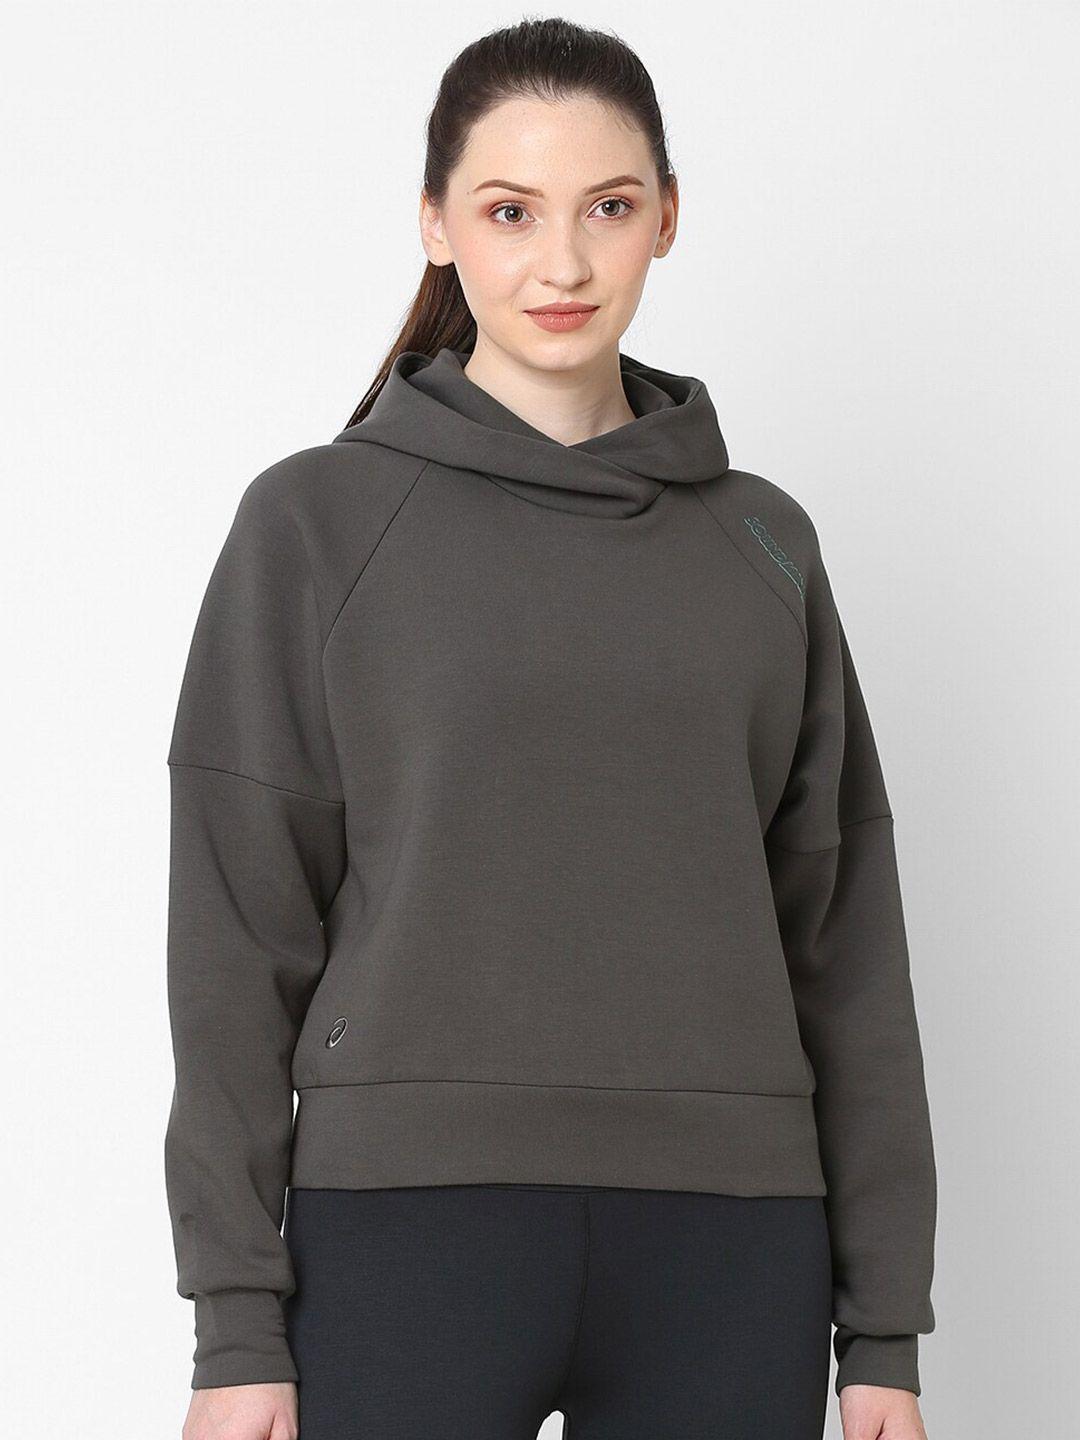 asics tech knit pullover women grey solid hooded sweatshirt